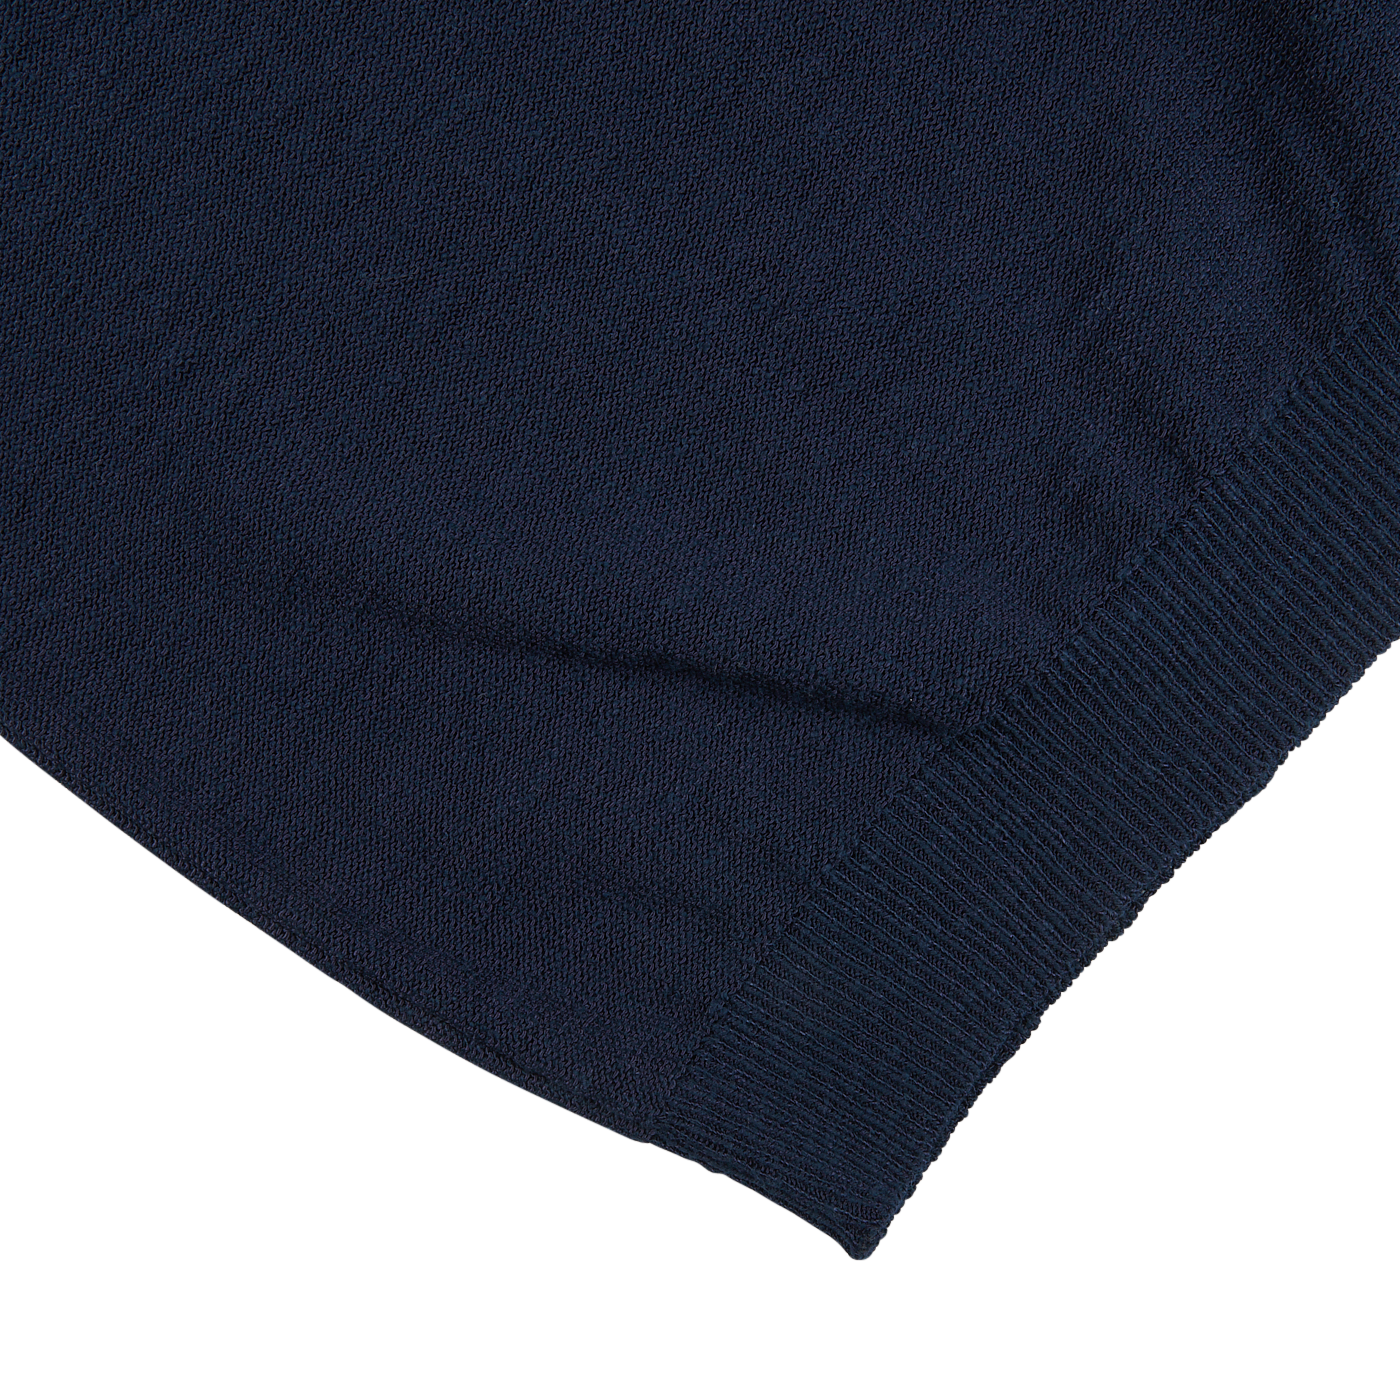 A close up of a Maurizio Baldassari navy blue cotton mouline crew neck sweater.